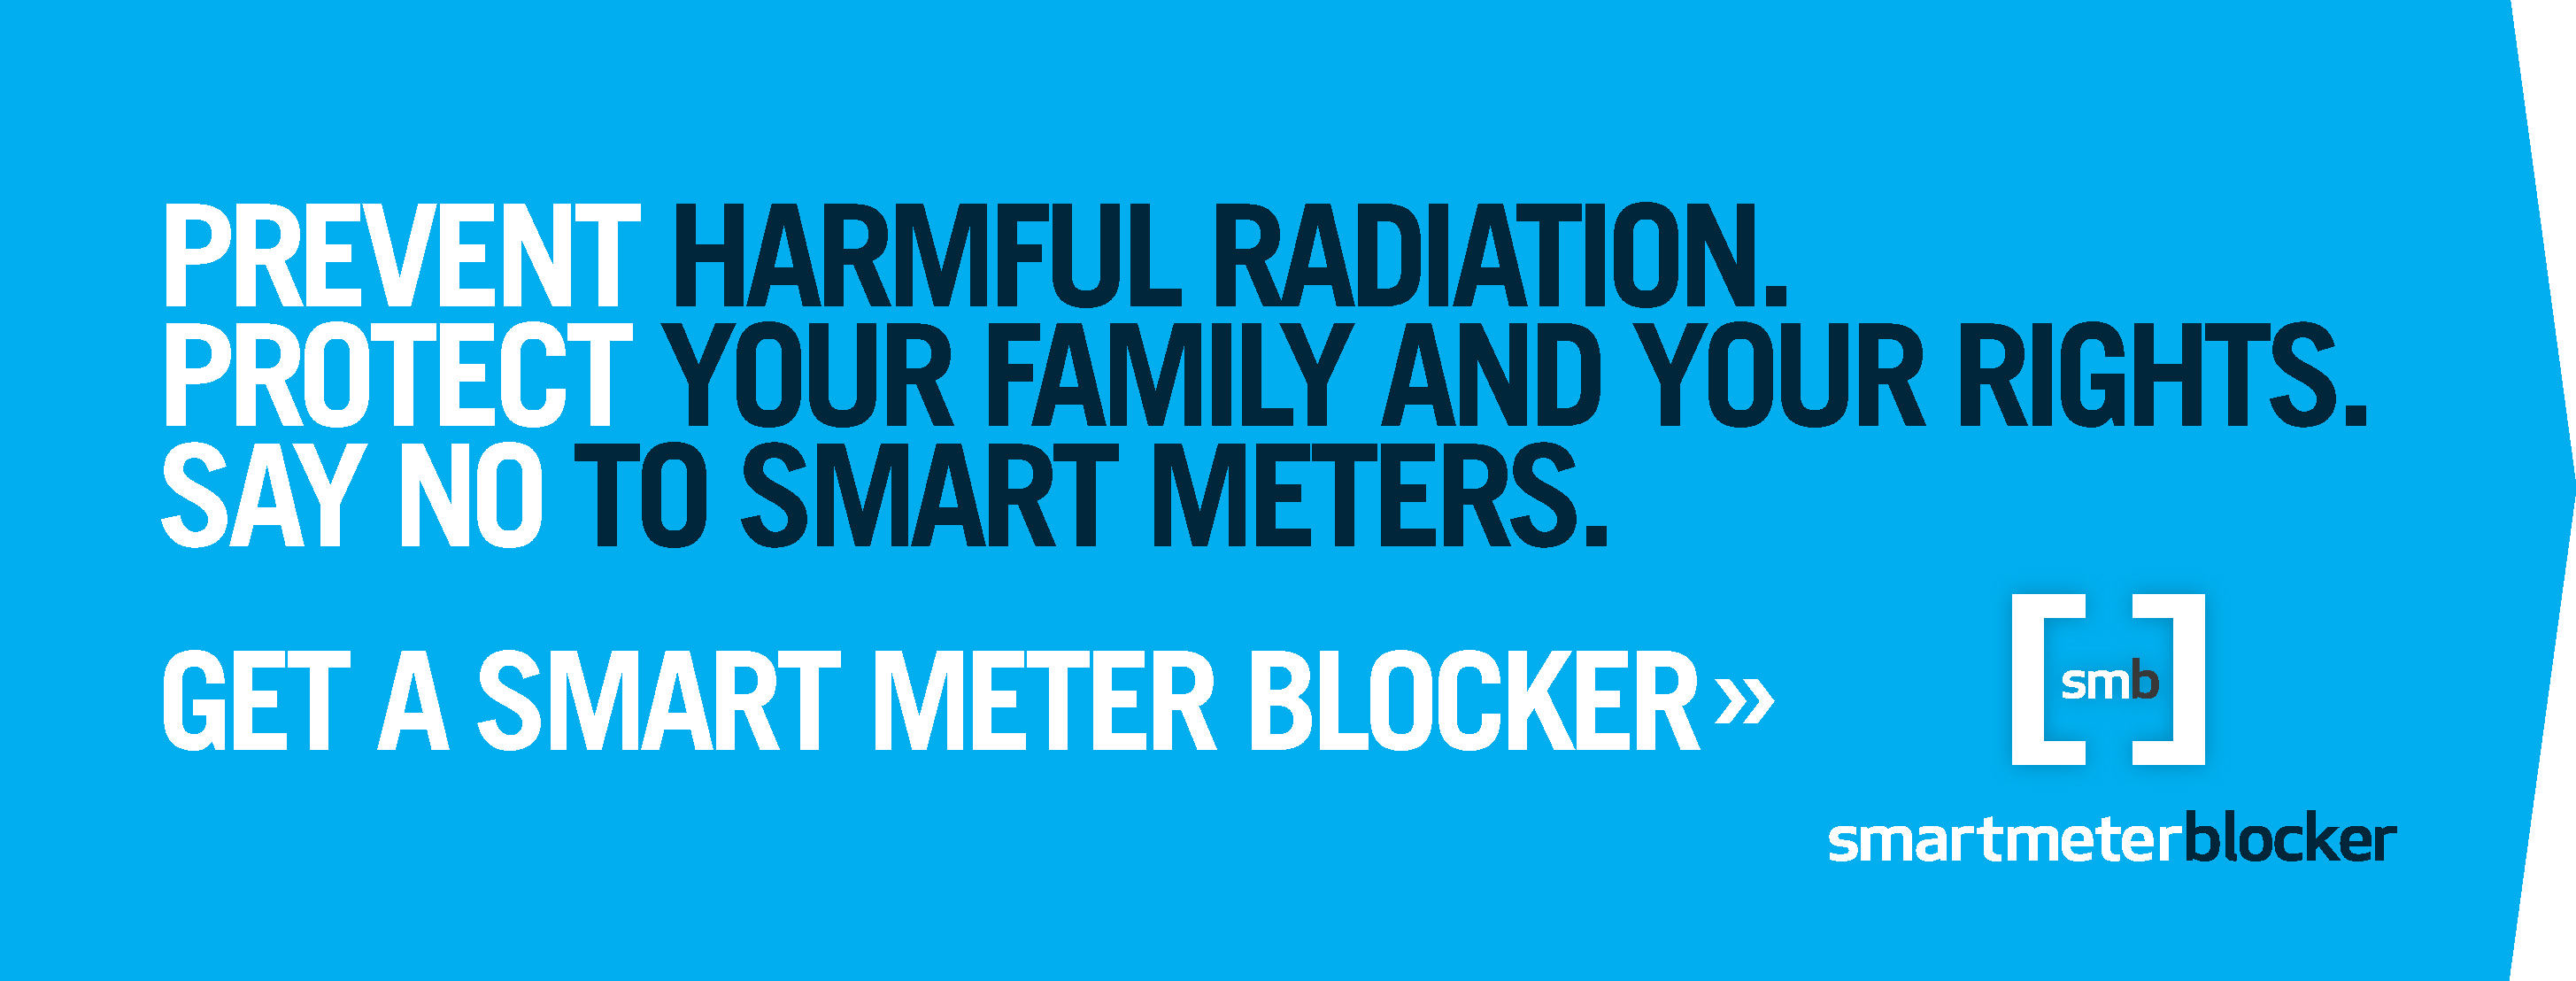 Smart Meter Blocker Footer Ad